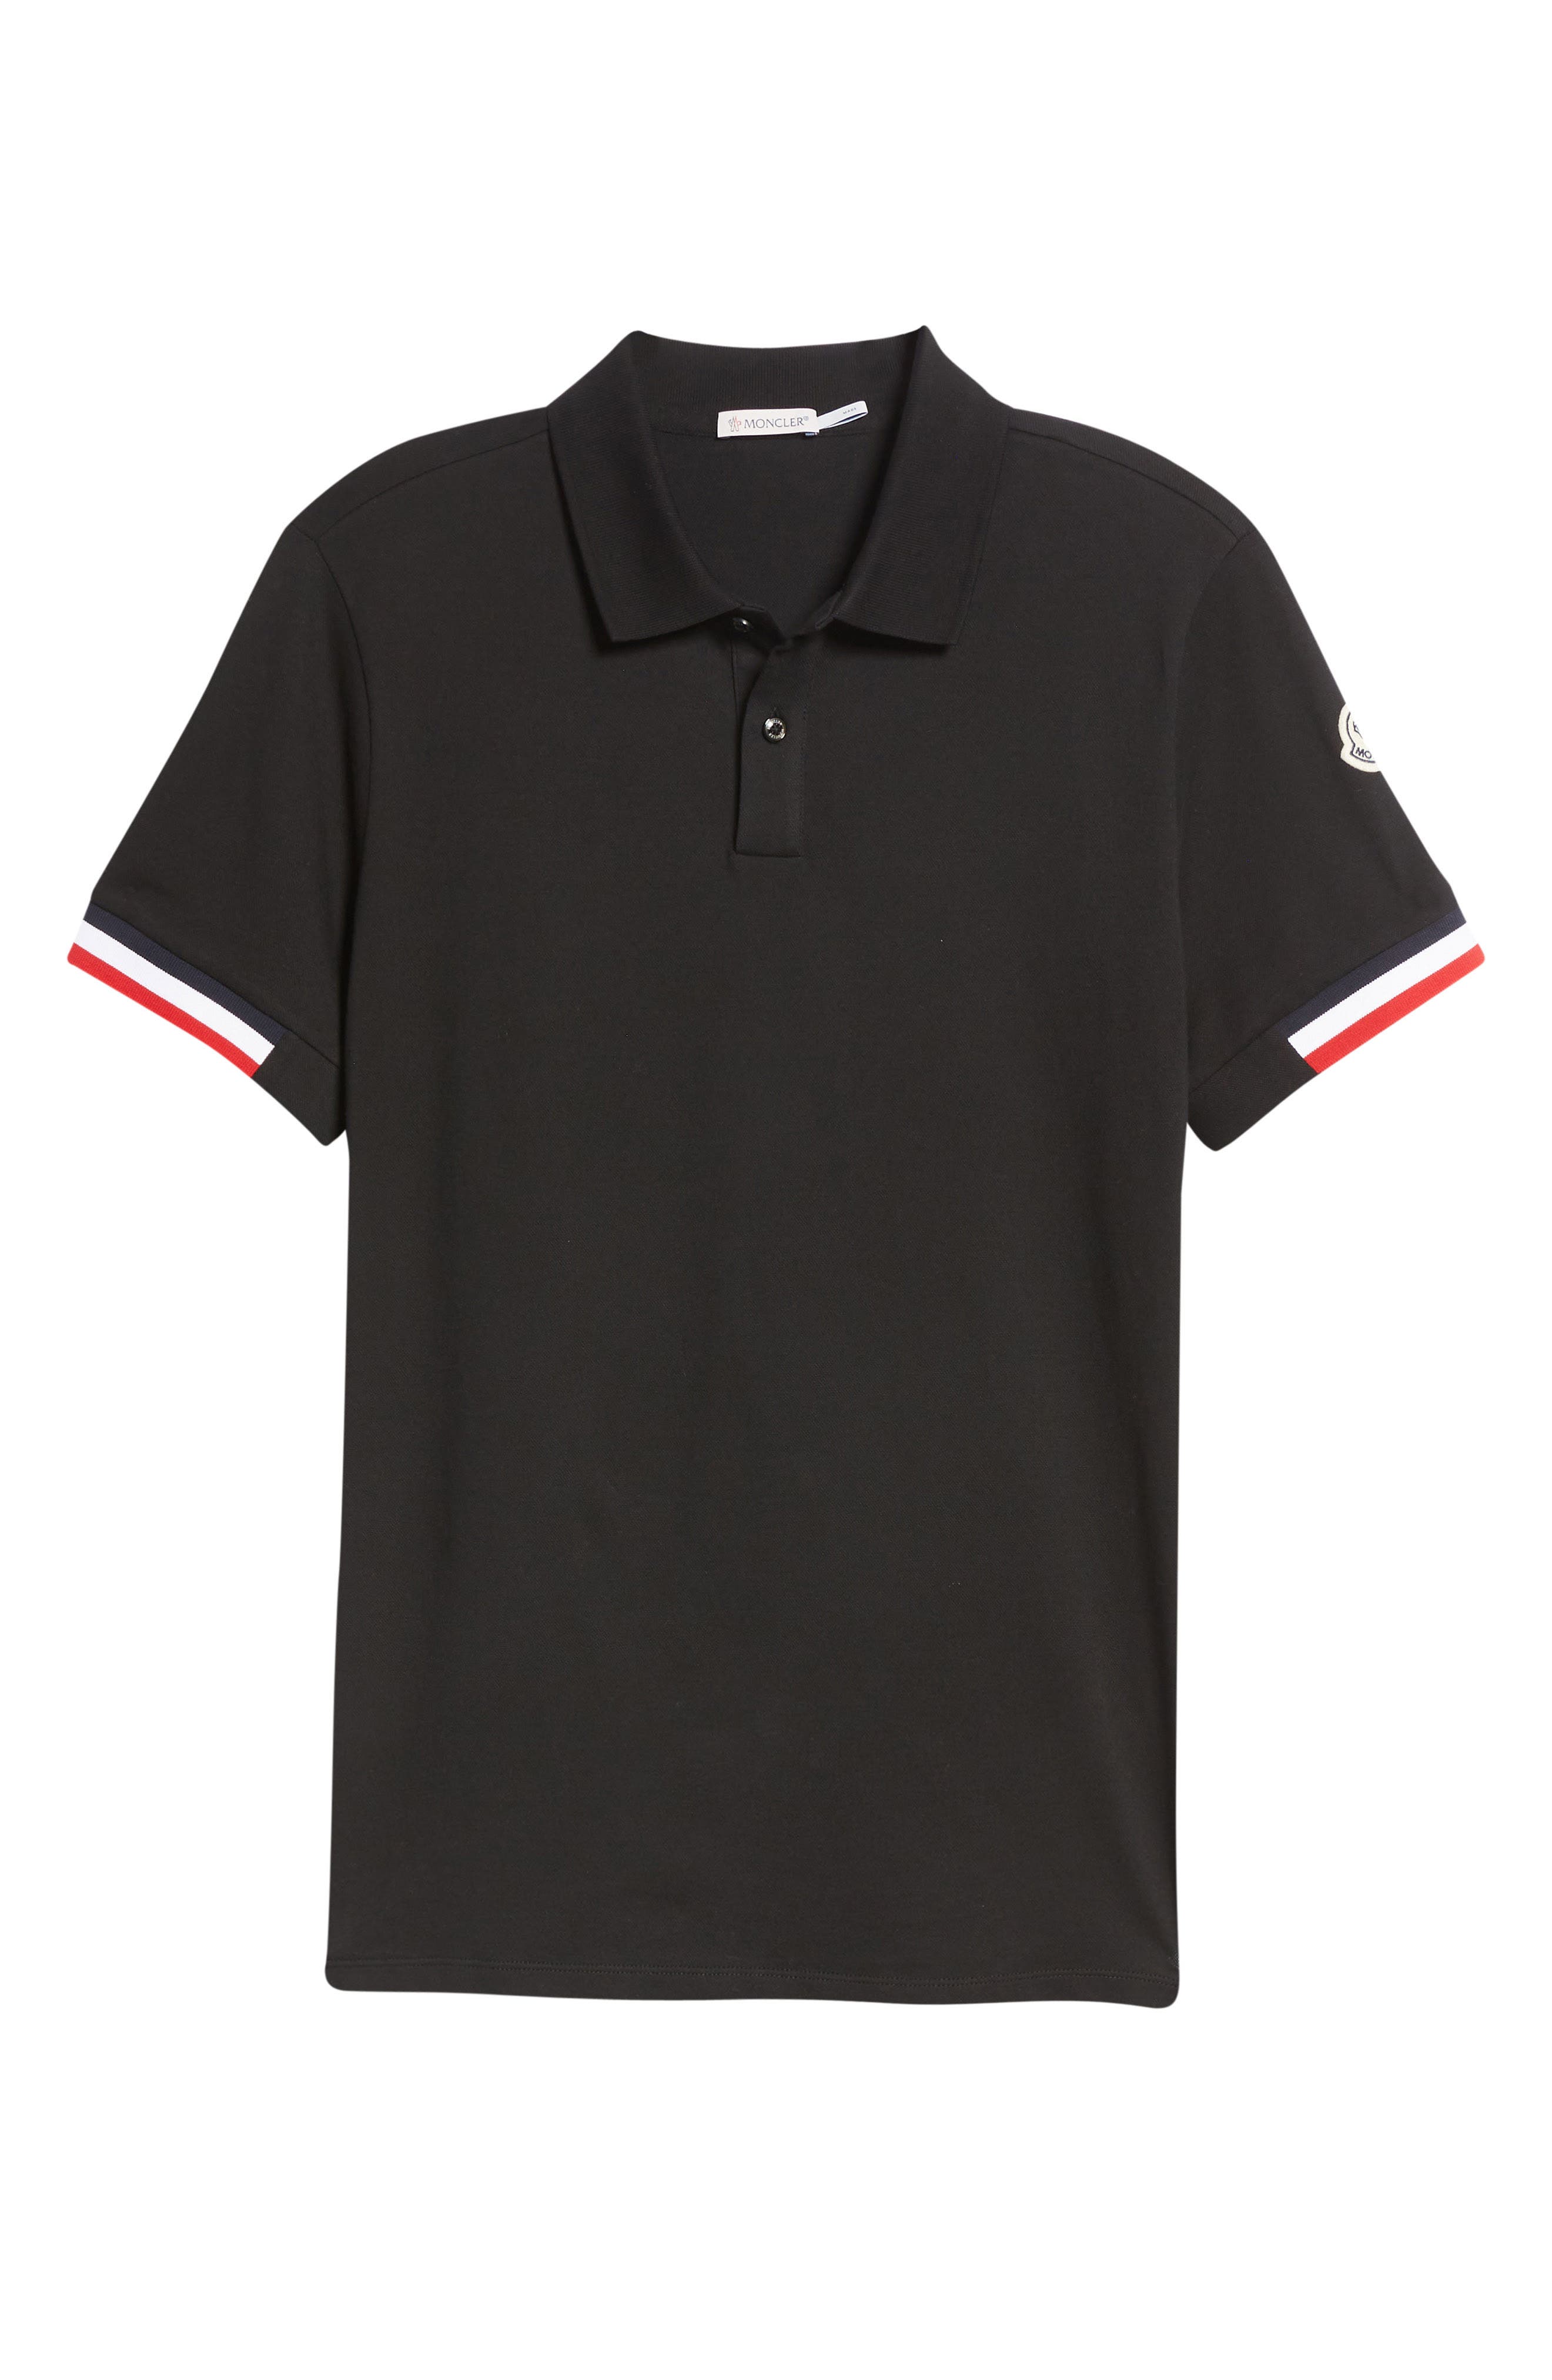 Moncler Men's Tricolor Accent Stretch Cotton Polo in 999-Black